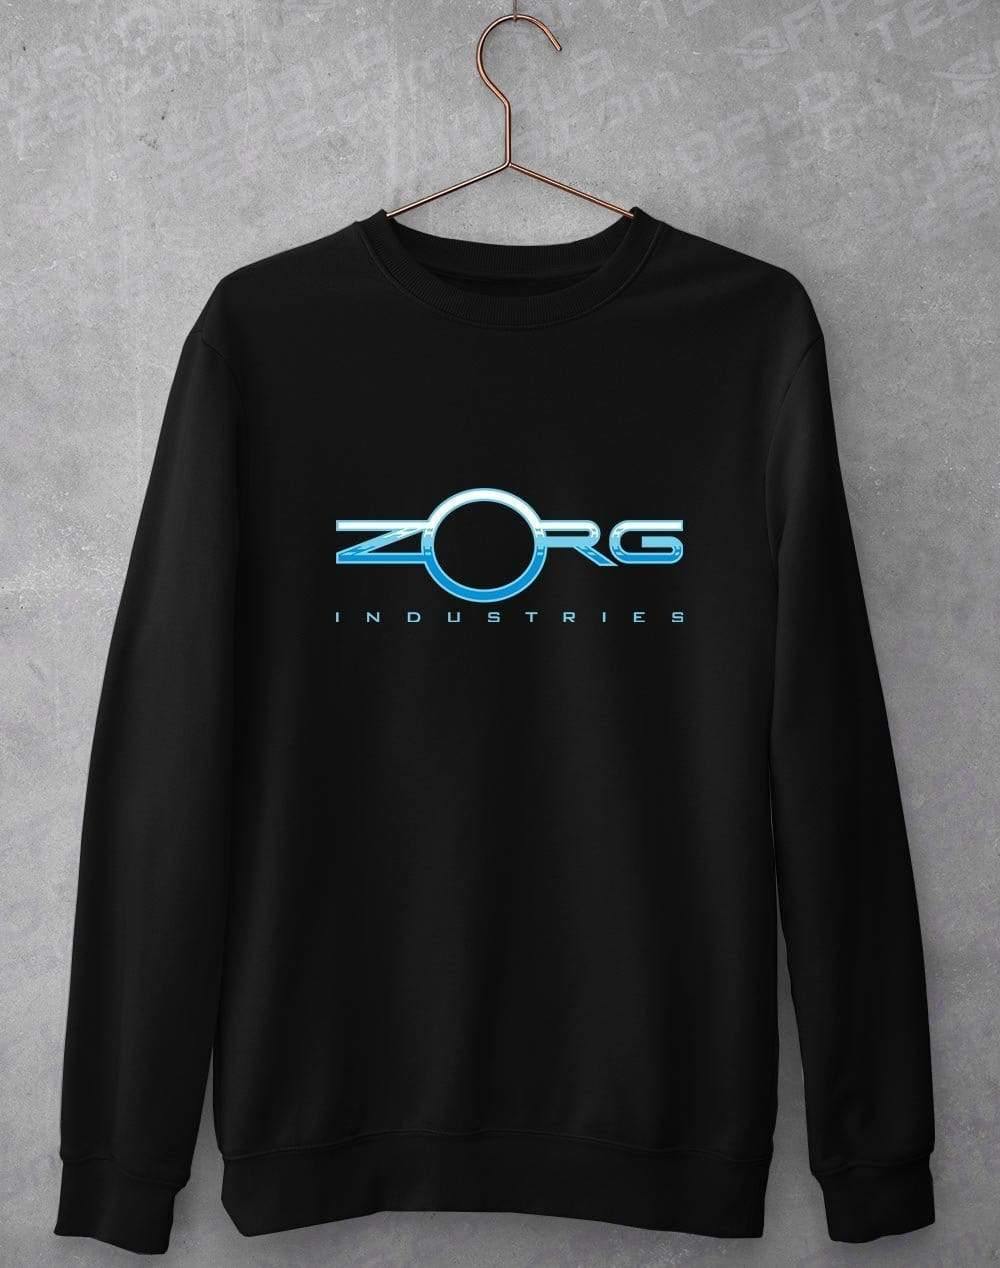 Zorg Industries Sweatshirt S / Black  - Off World Tees